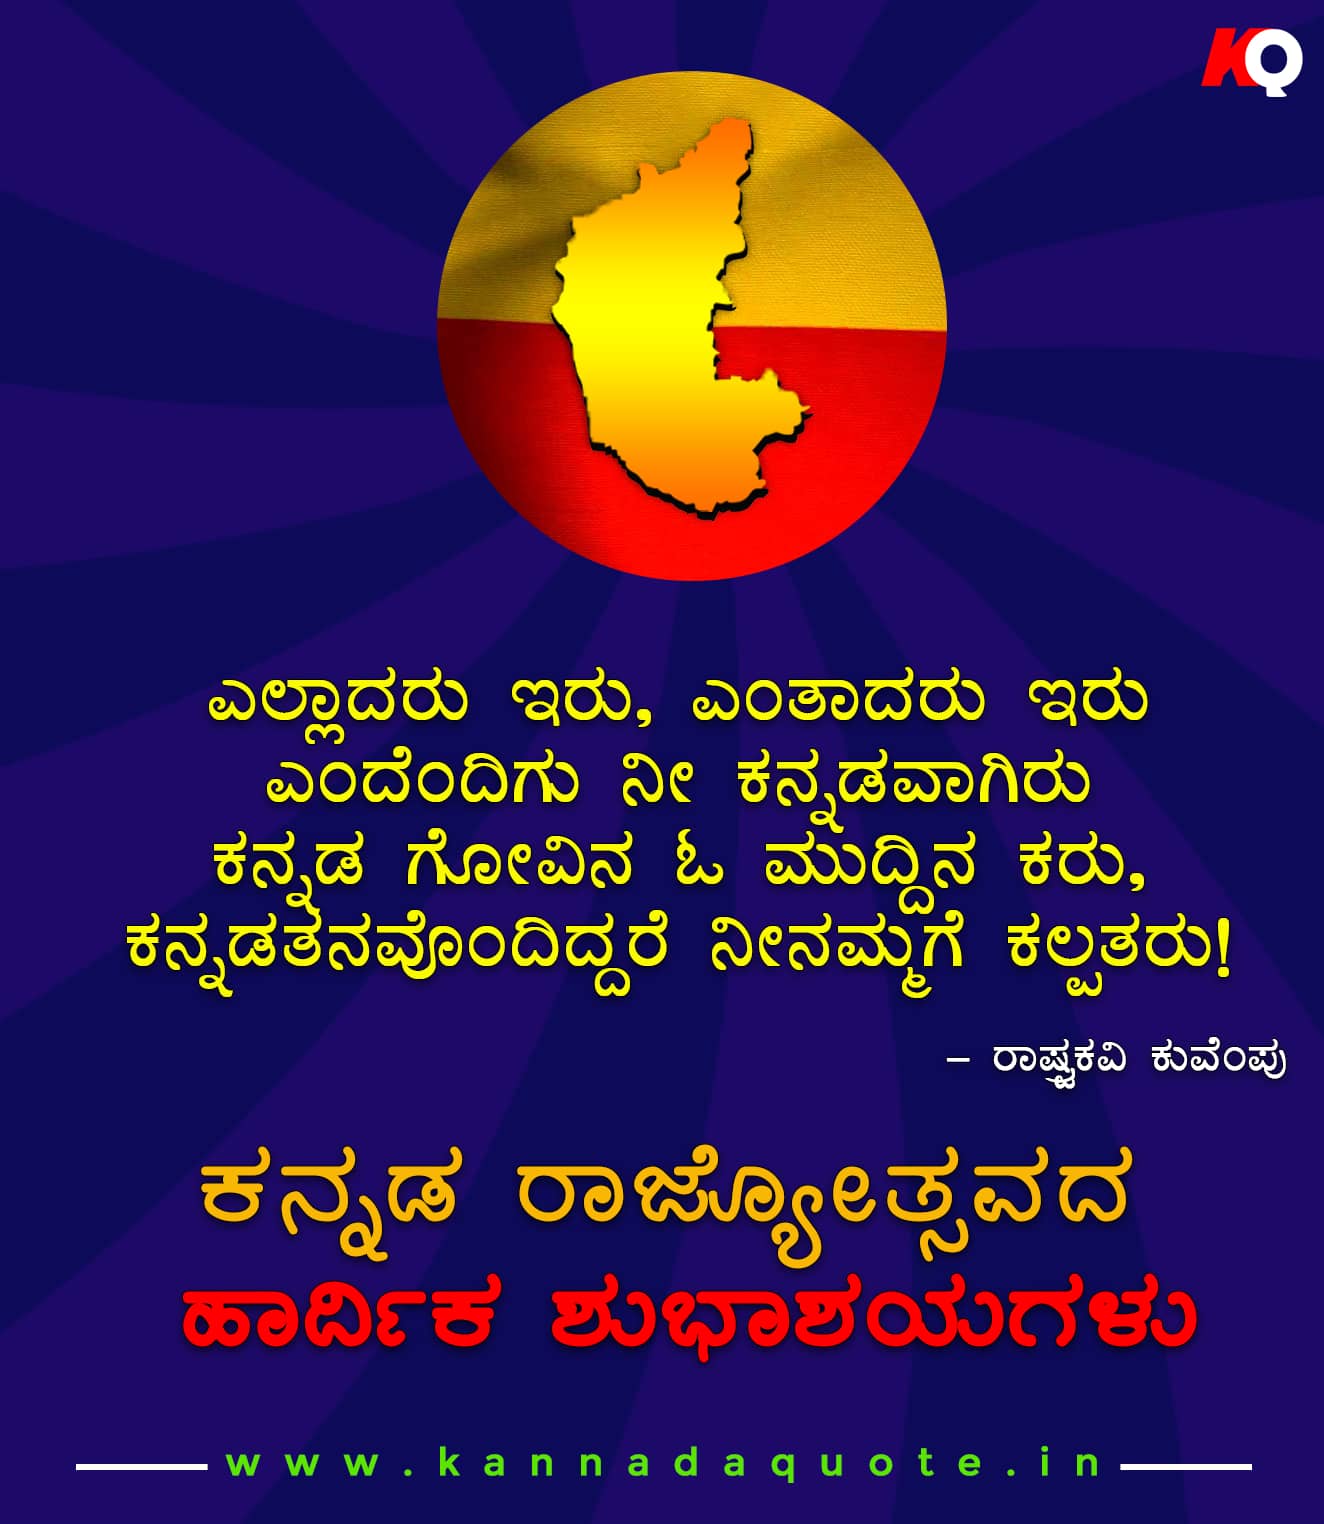 Kuvempu famous quotes in Kannada about Kannada language